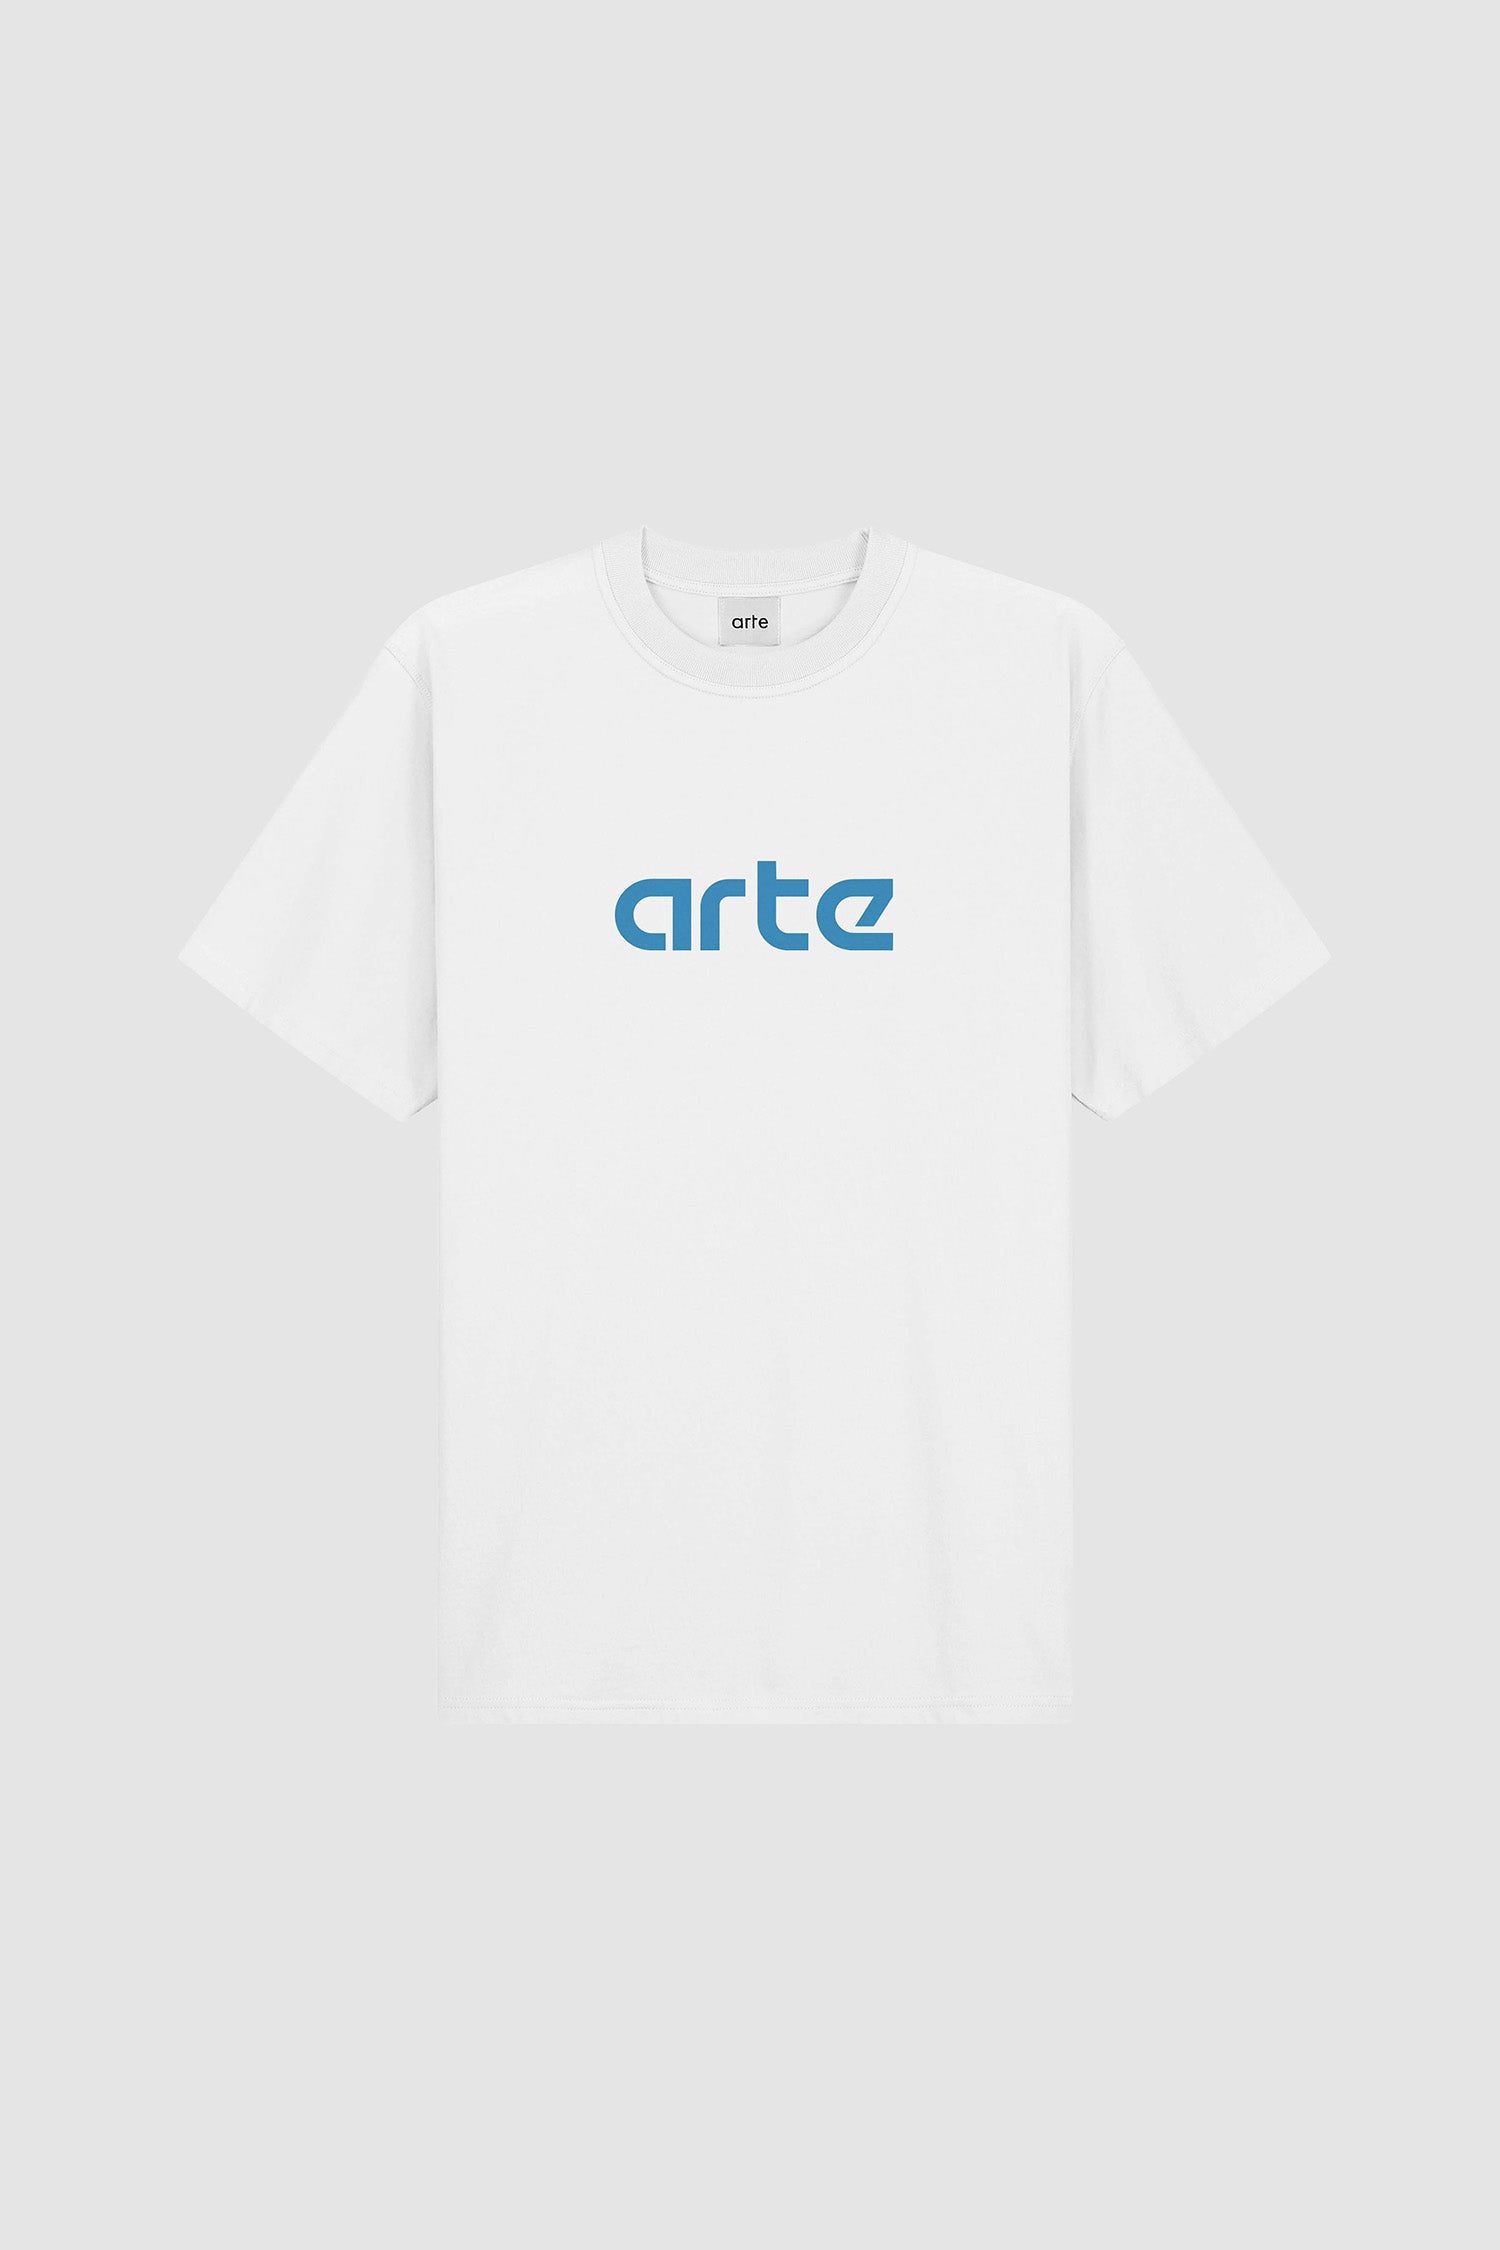 Teo Arte T-shirt - White